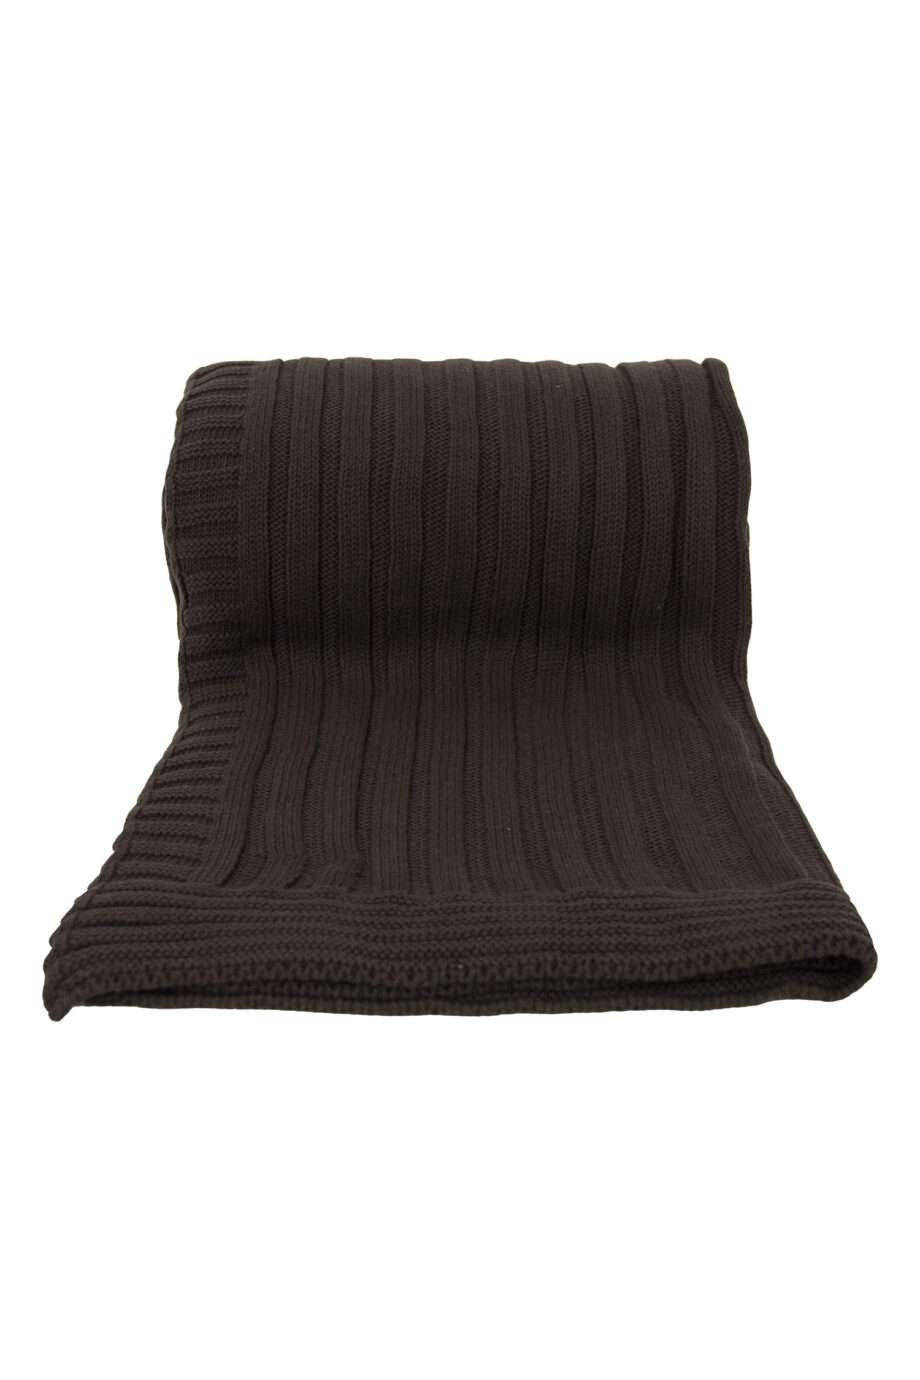 ribs choc knitted cotton plaid medium